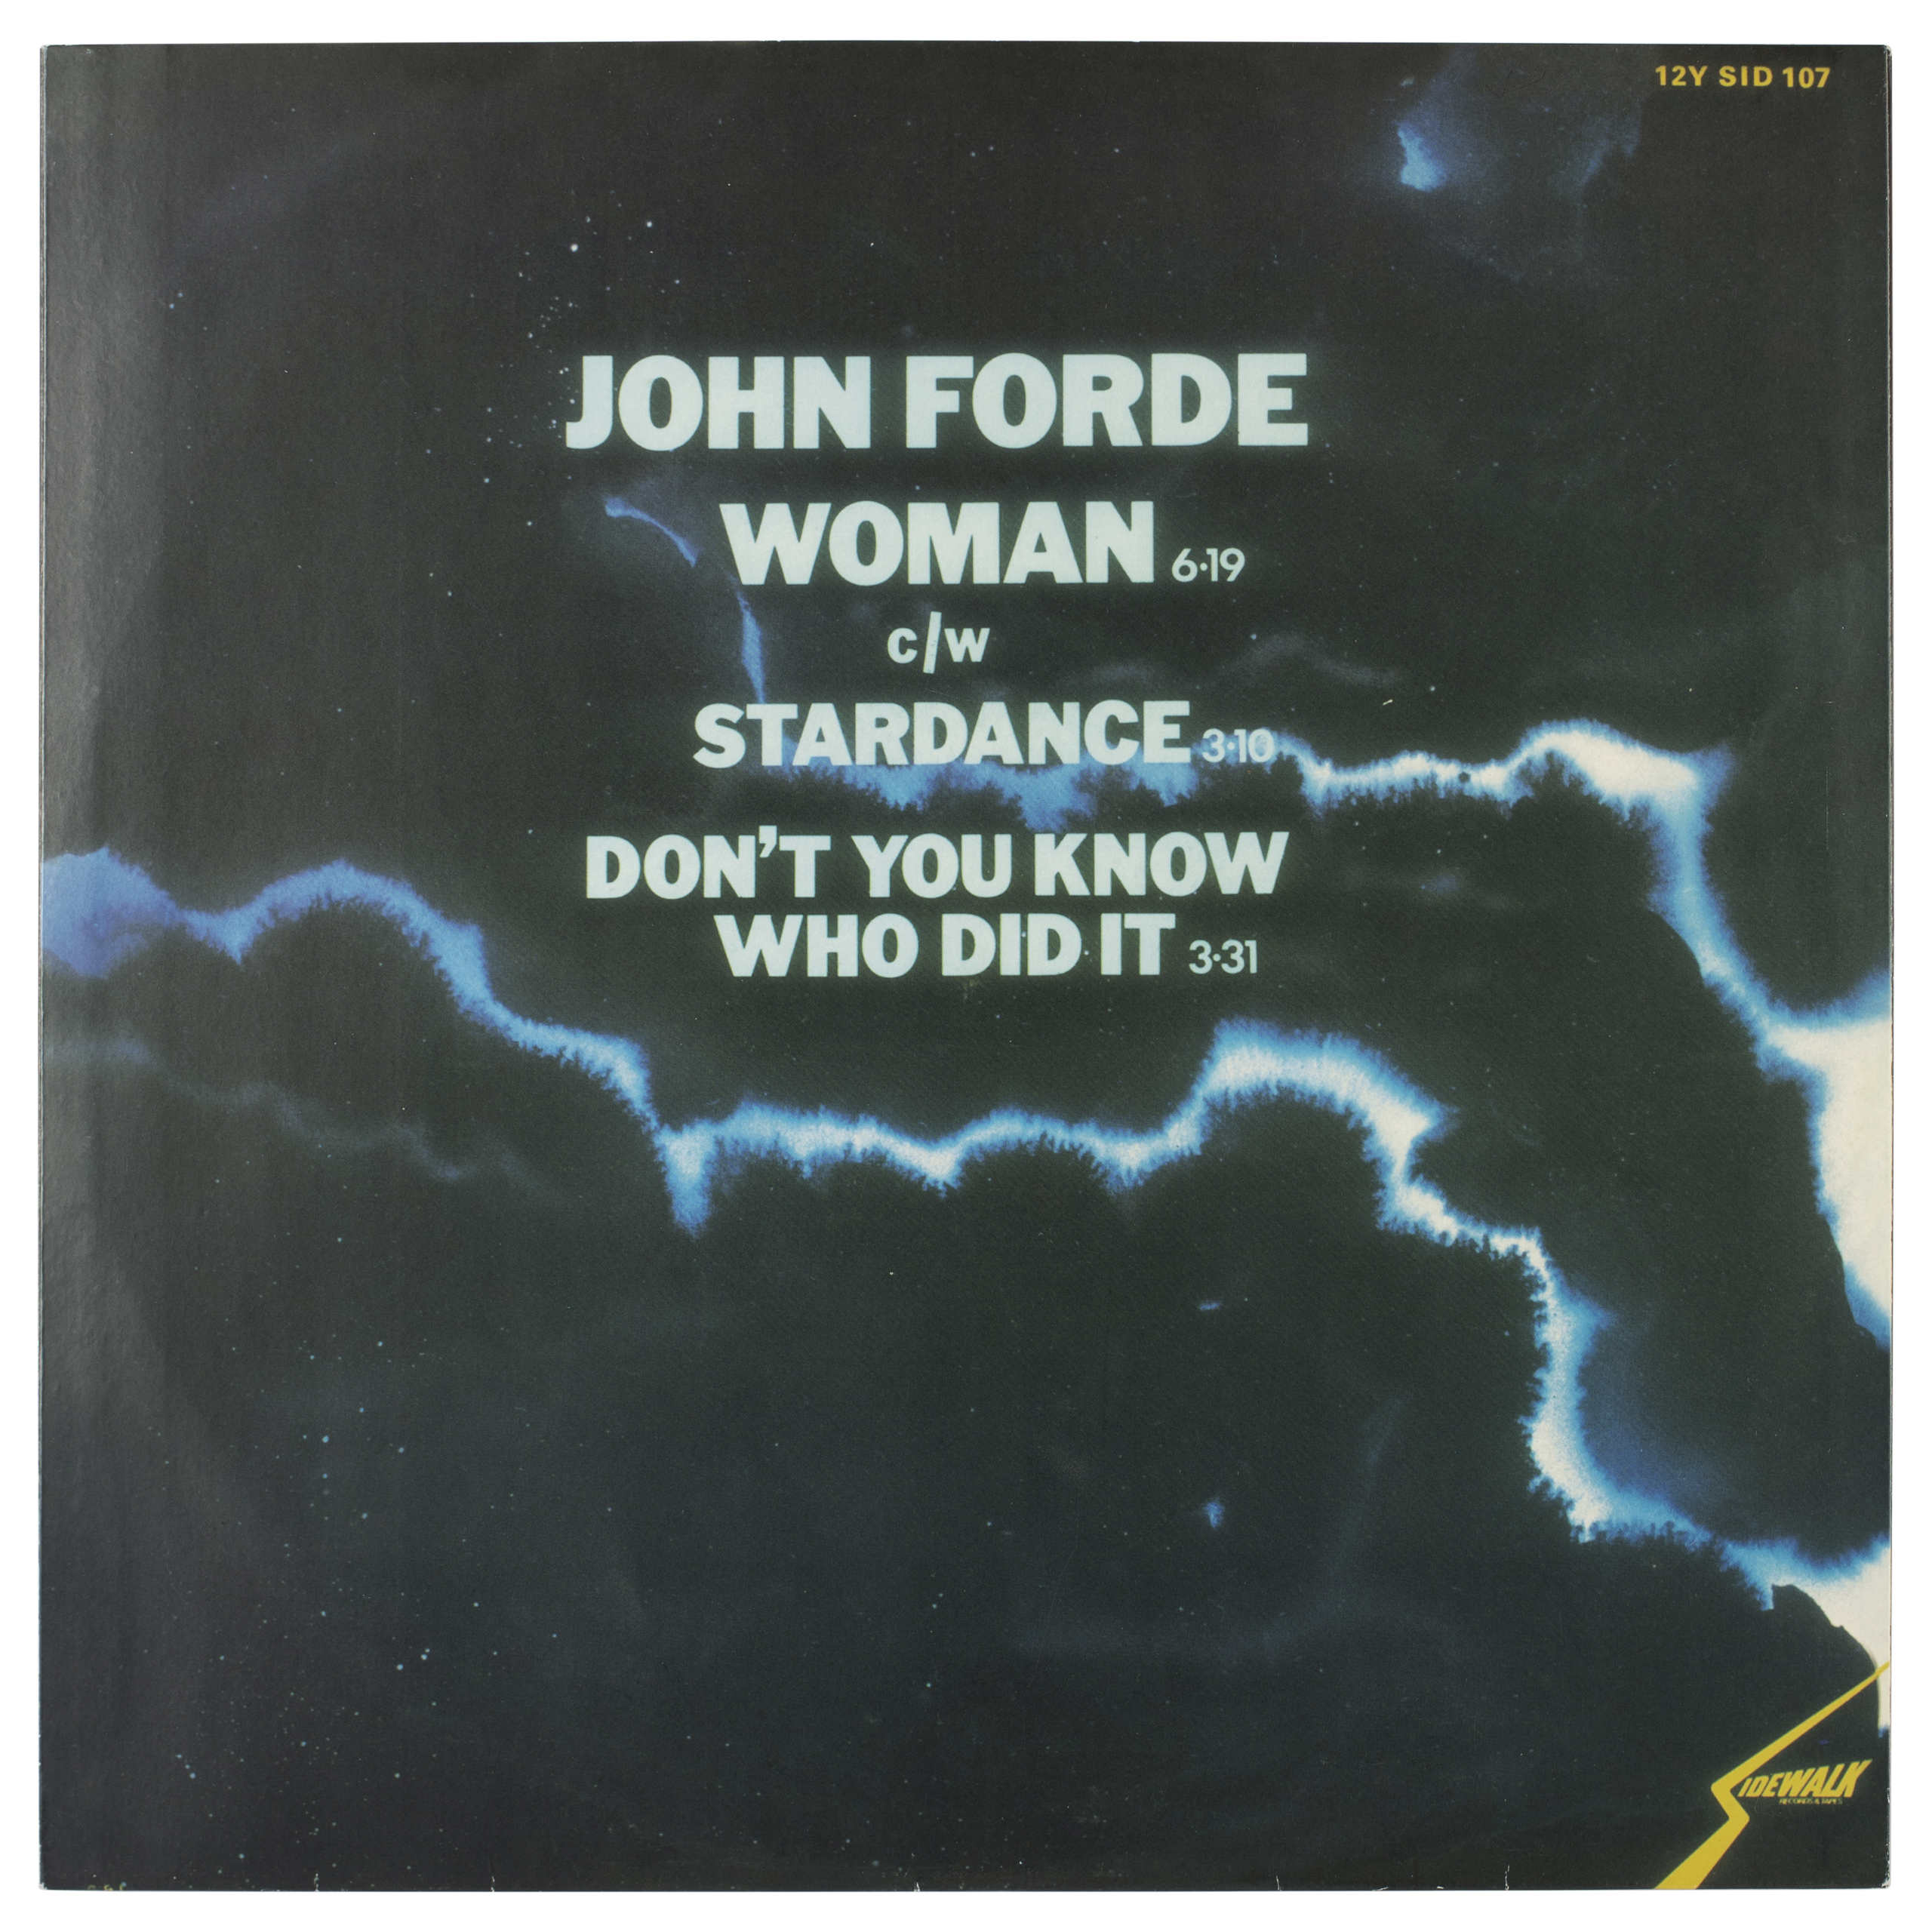 Винил John Forde - Woman SV John Forde - Woman, размер One Size - фото 2